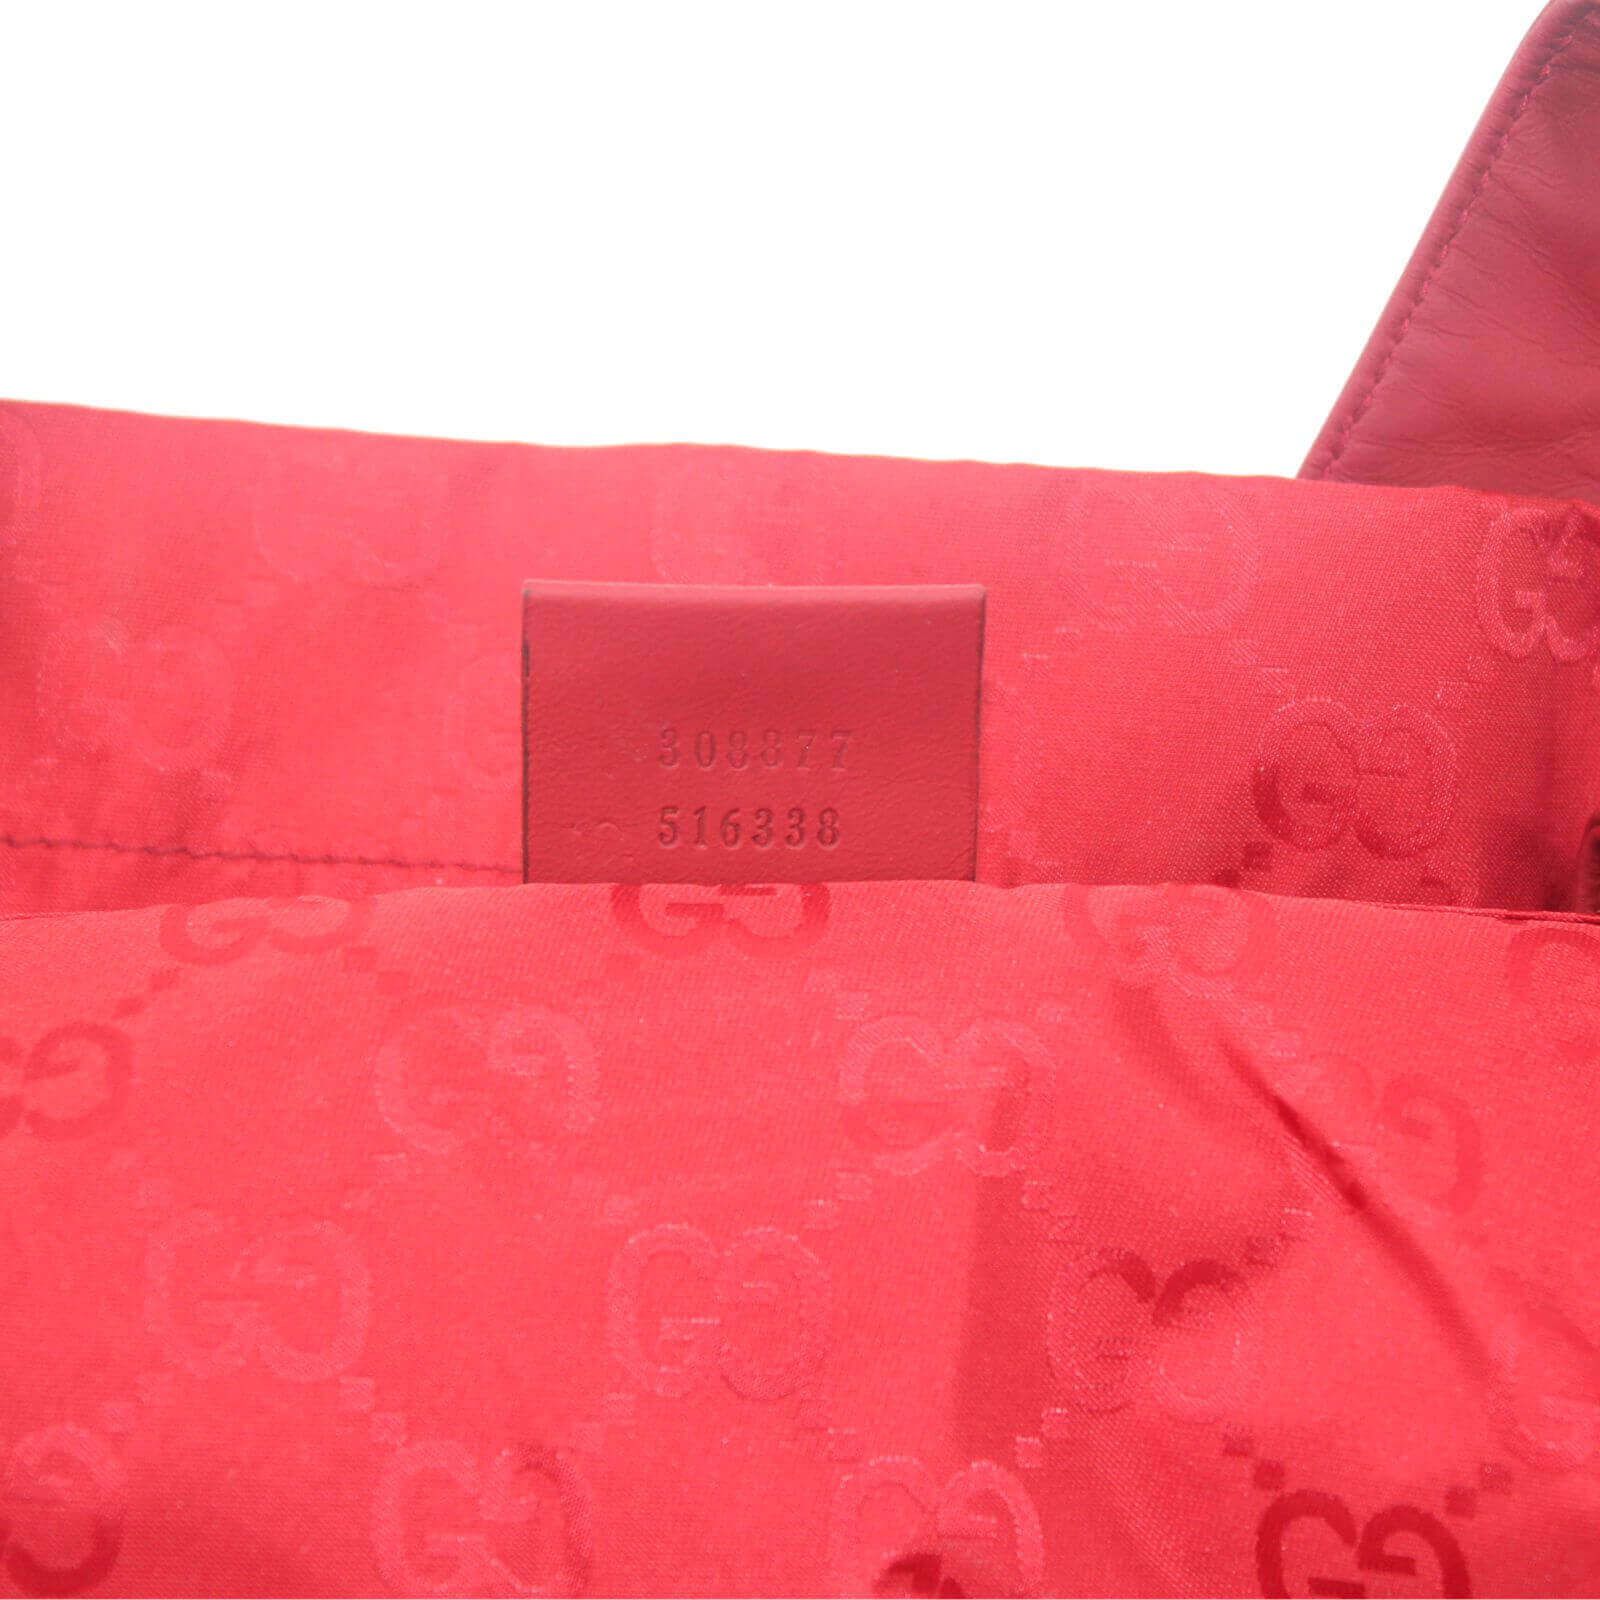 Gucci Red Nylon Toiletry Bag